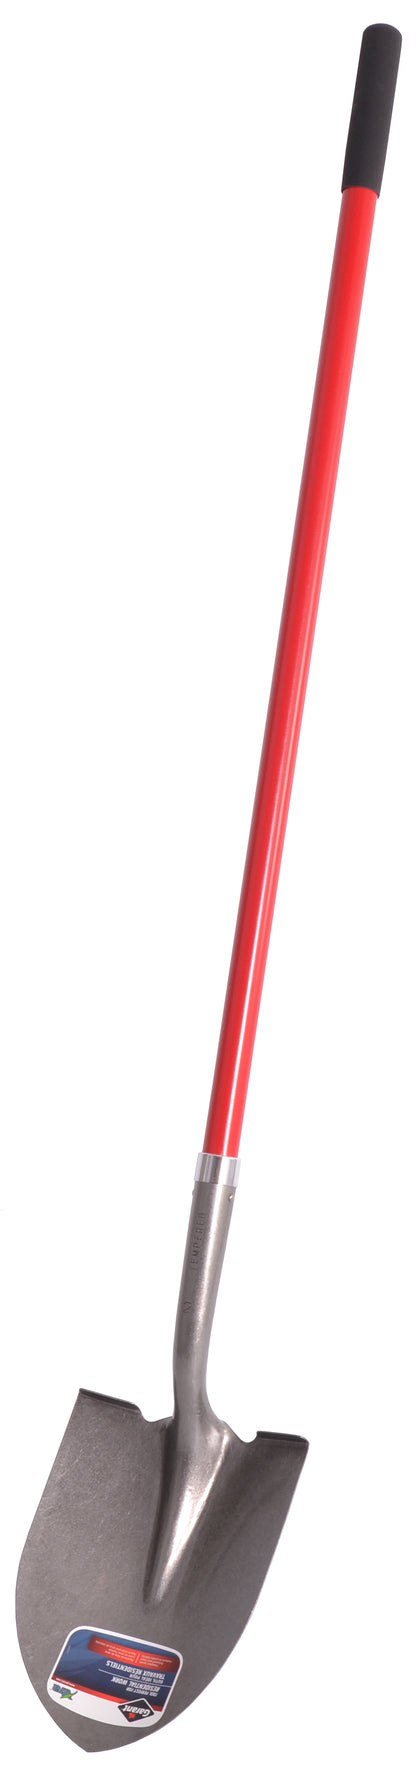 Excavator shovel, long fiberglass handle